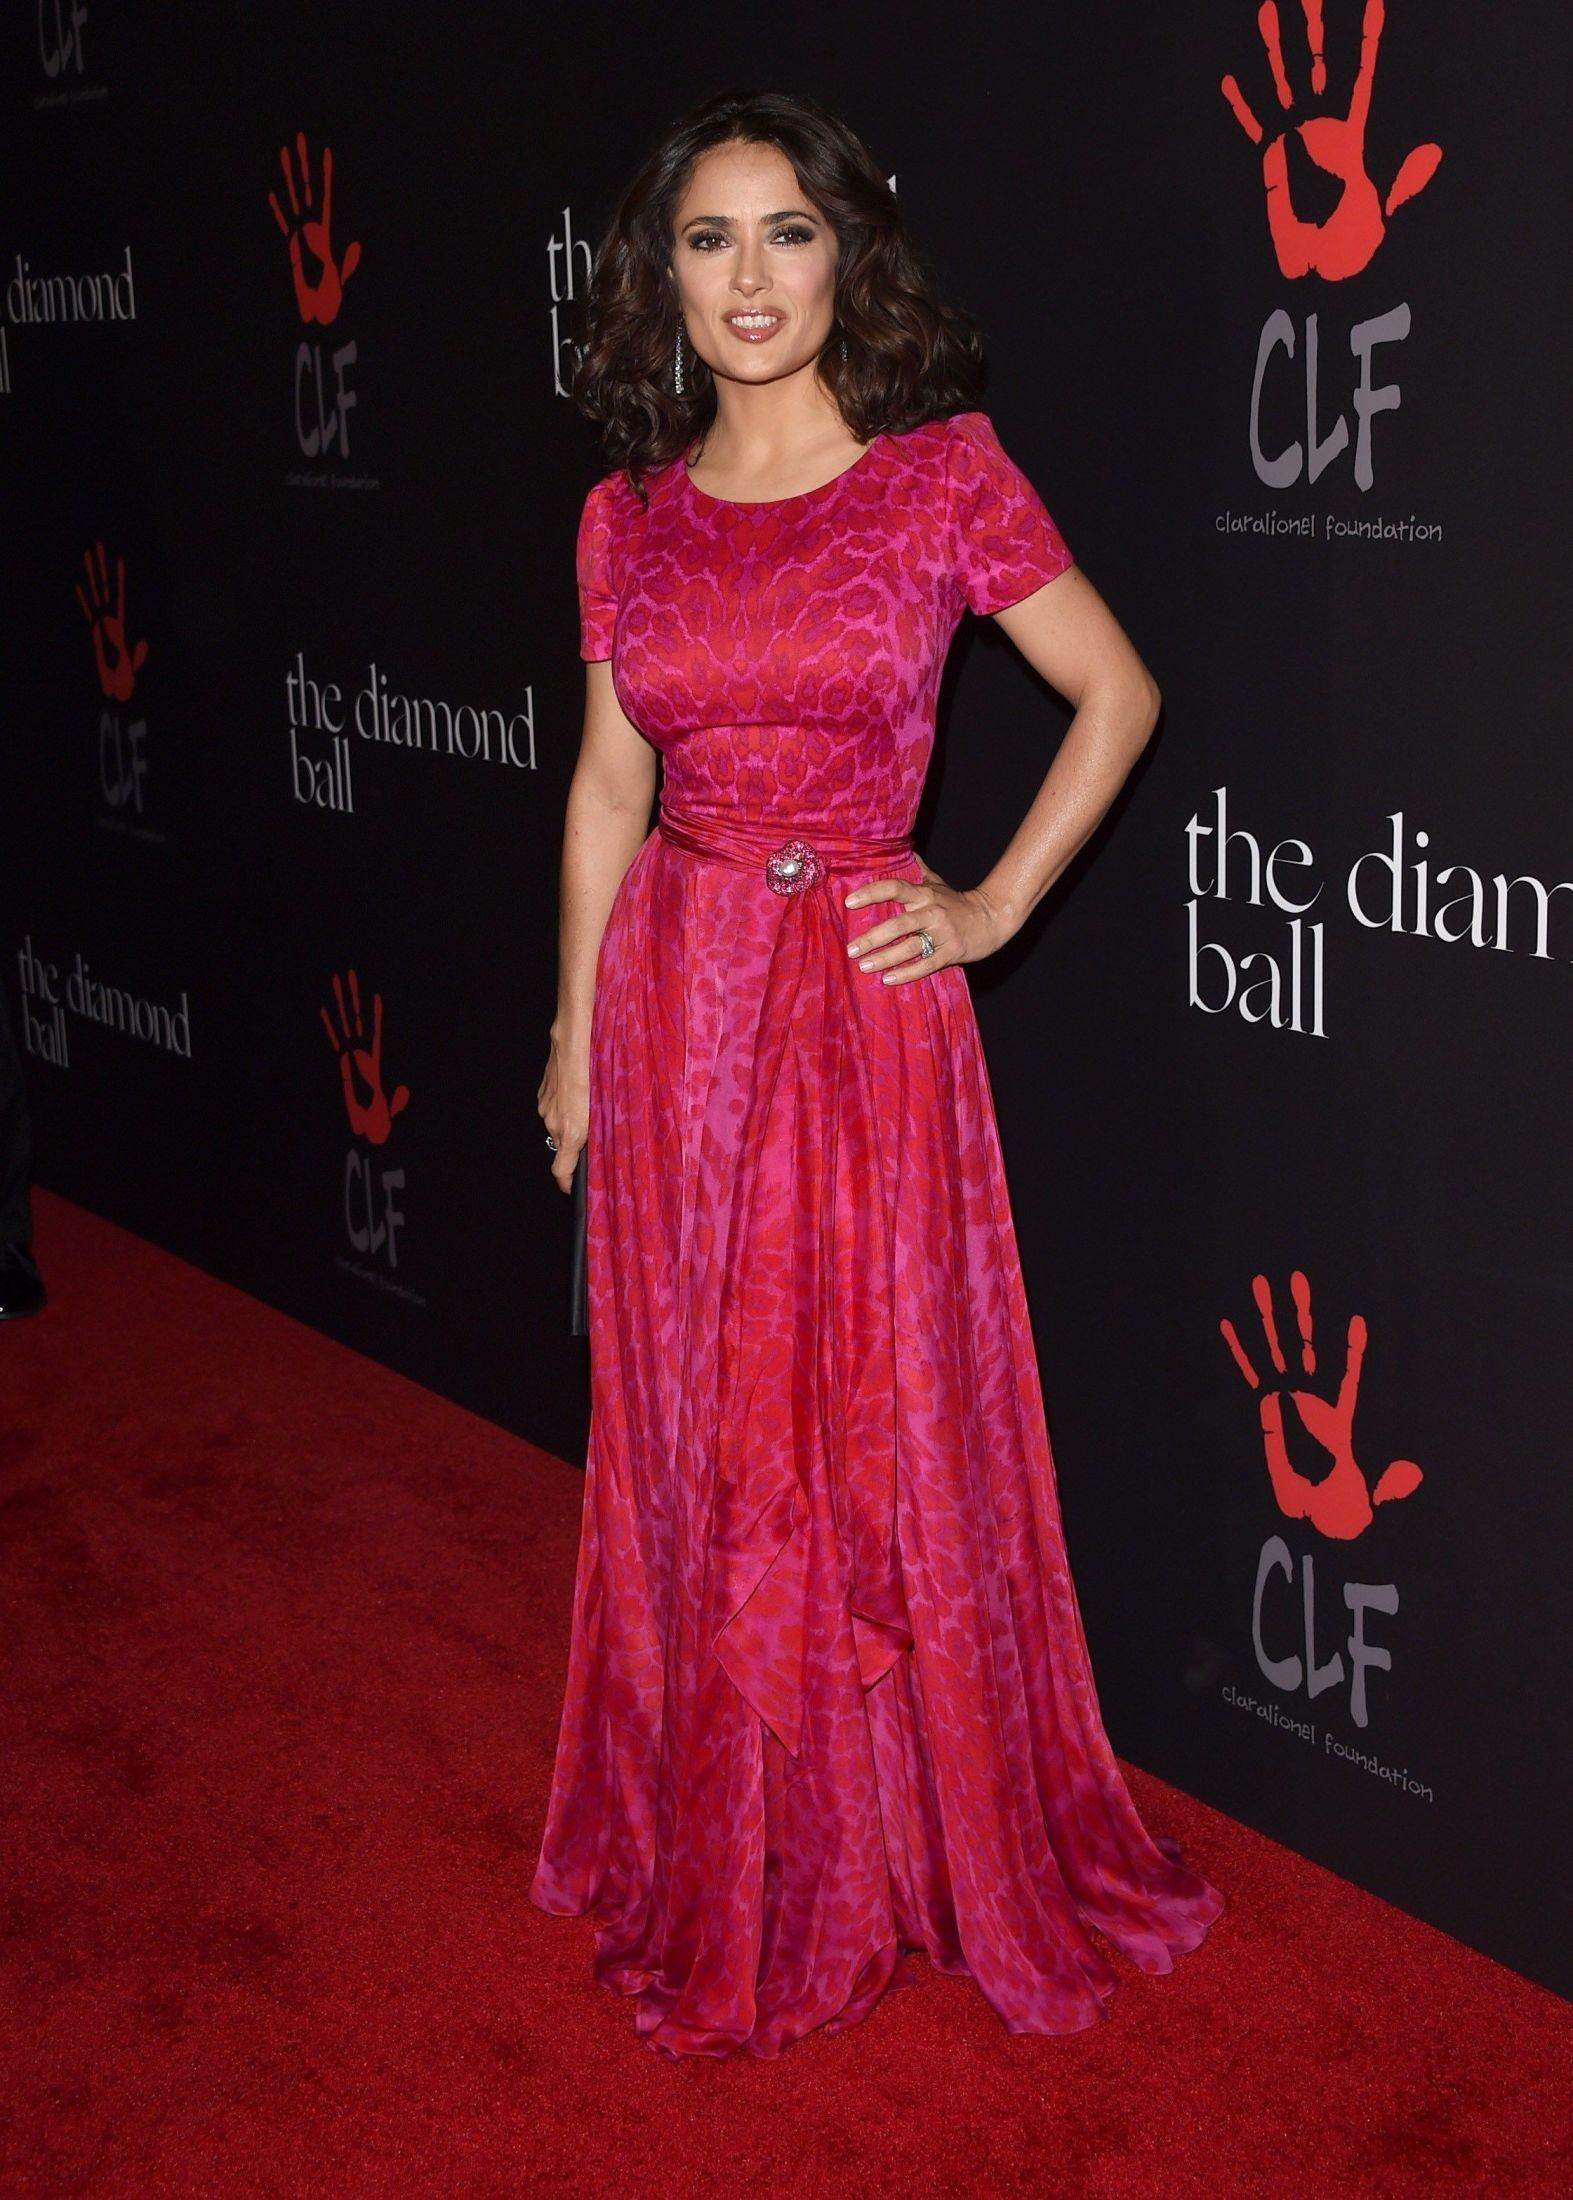 GLAM: Skuespilleren Salma Hayek valgte en rødrosa-kjole i spraglete leopard-mønster på den røde løperen. Foto: Getty Images